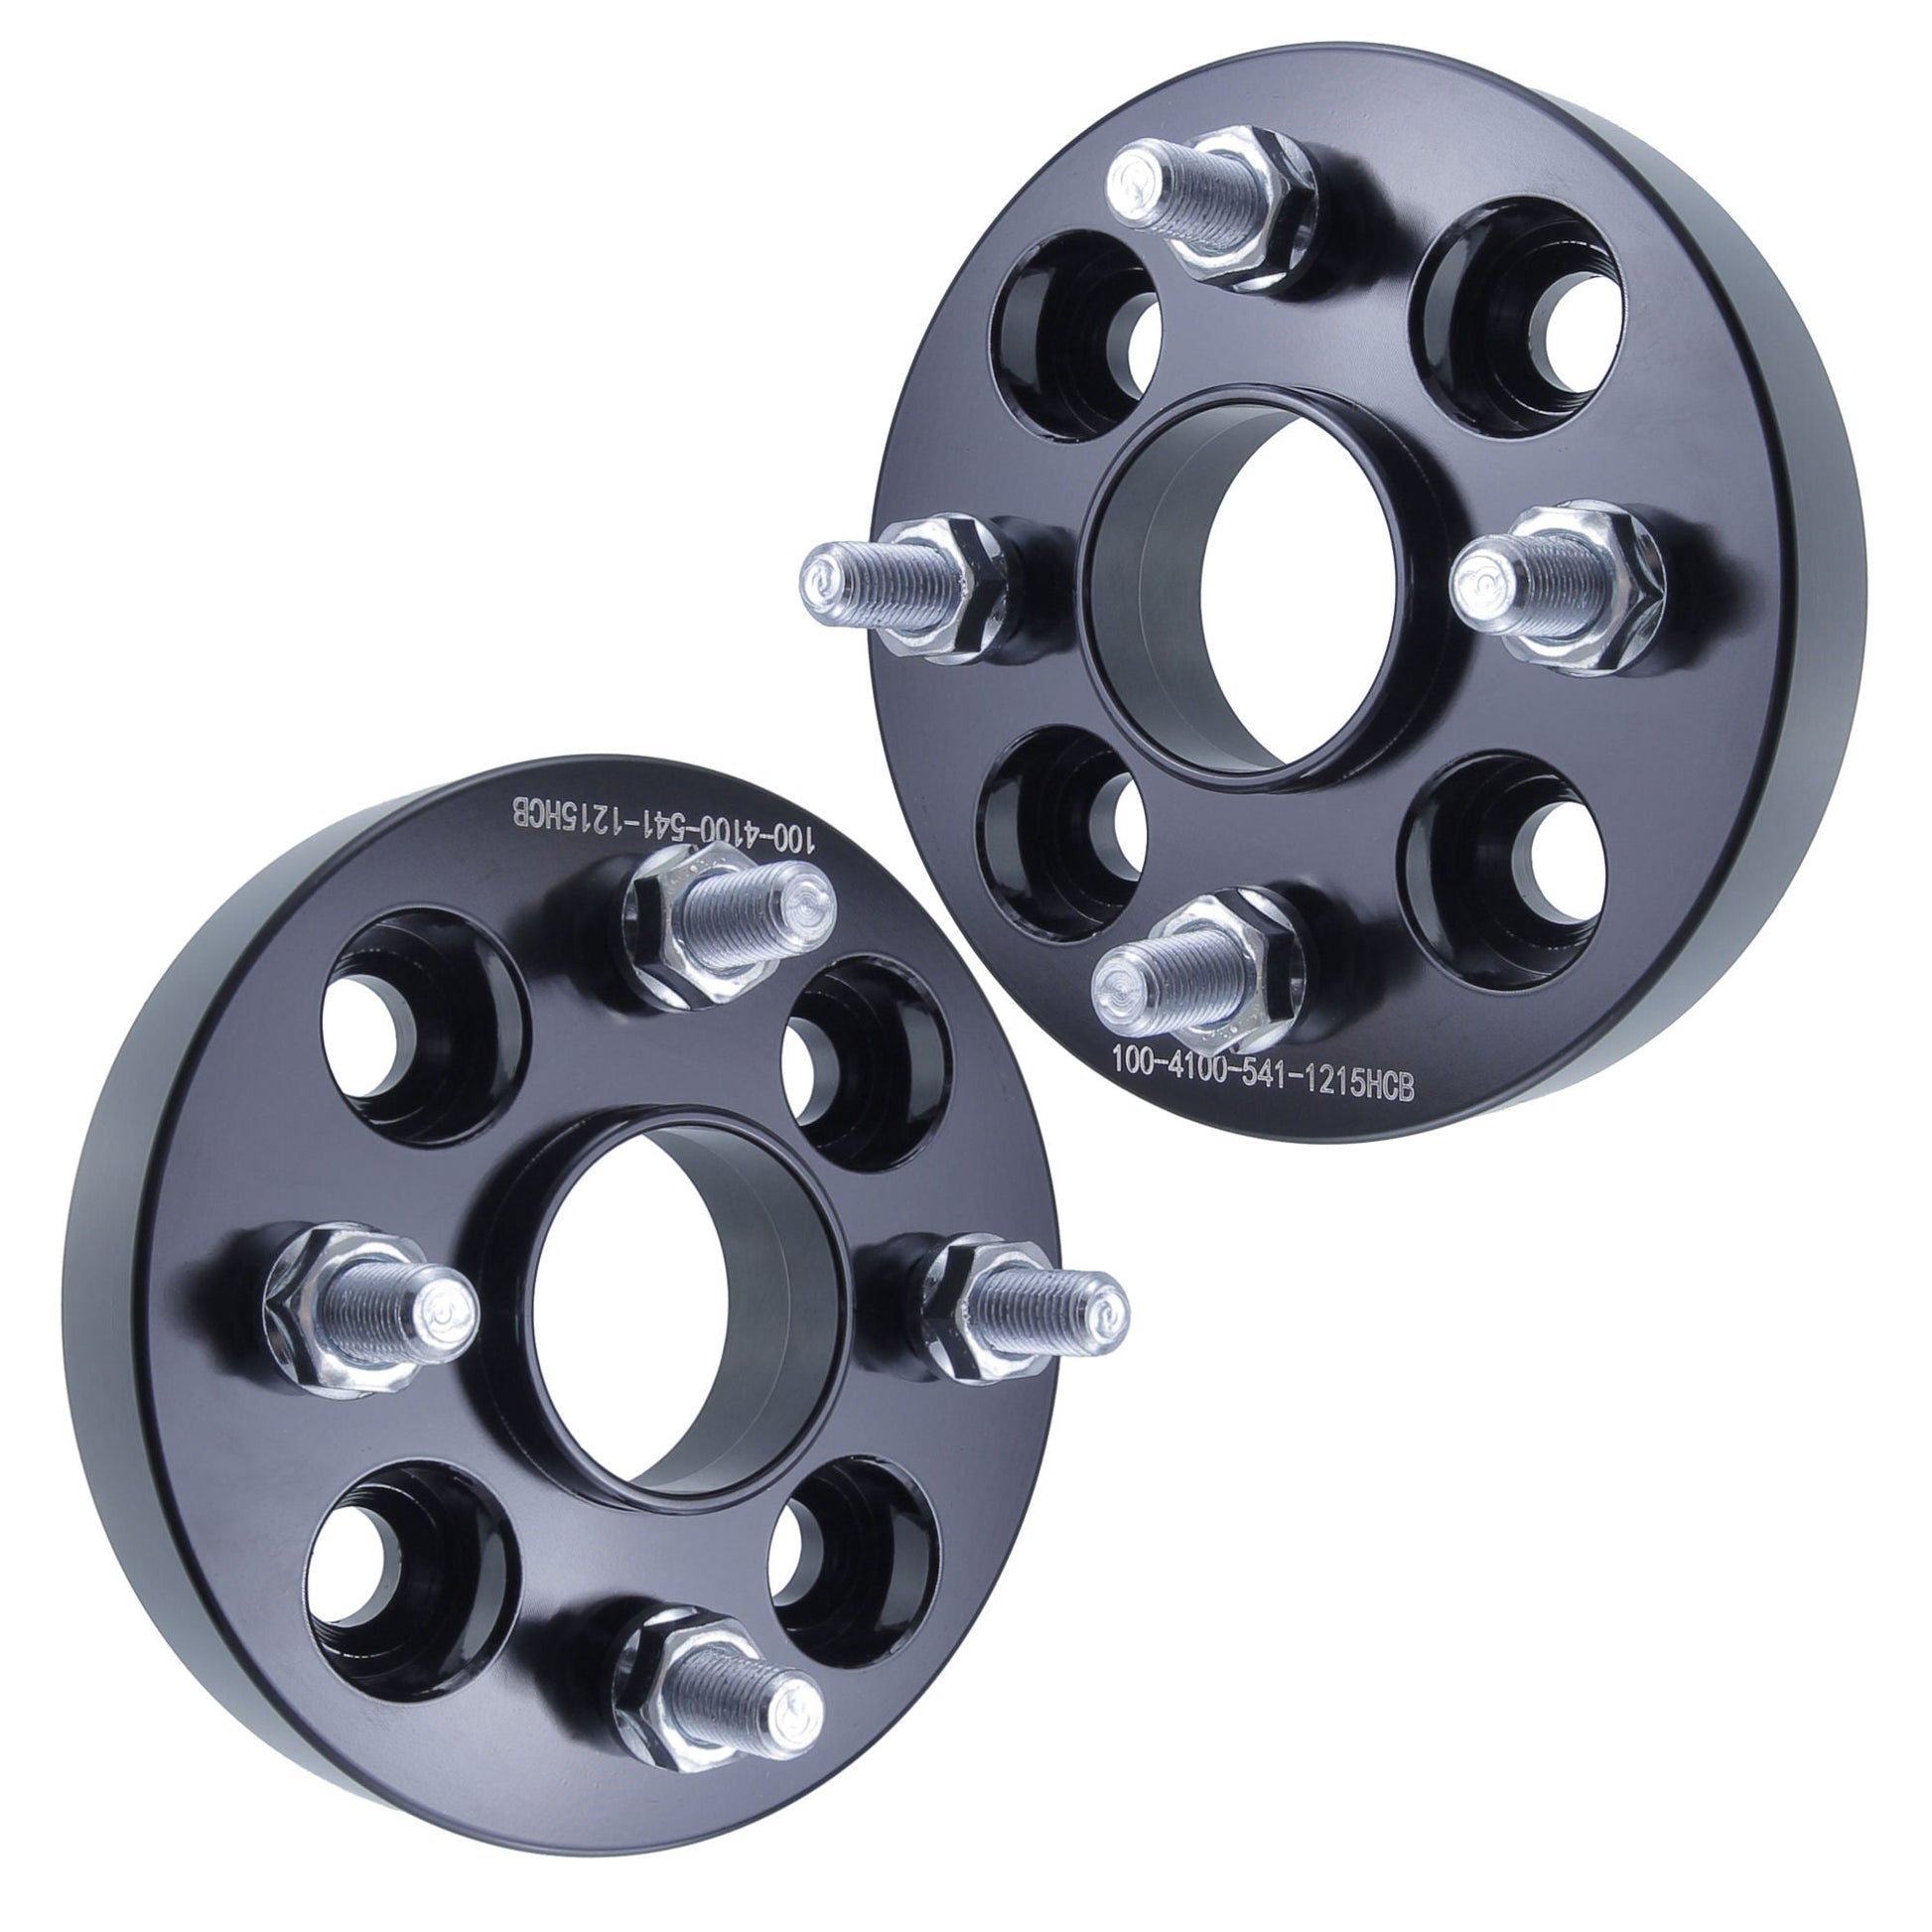 25mm (1") Titan Wheel Spacers for Mazda Miata Scion xB Toyota MR2 | 4x100 | 54.1 Hubcentric | Set of 4 | Titan Wheel Accessories